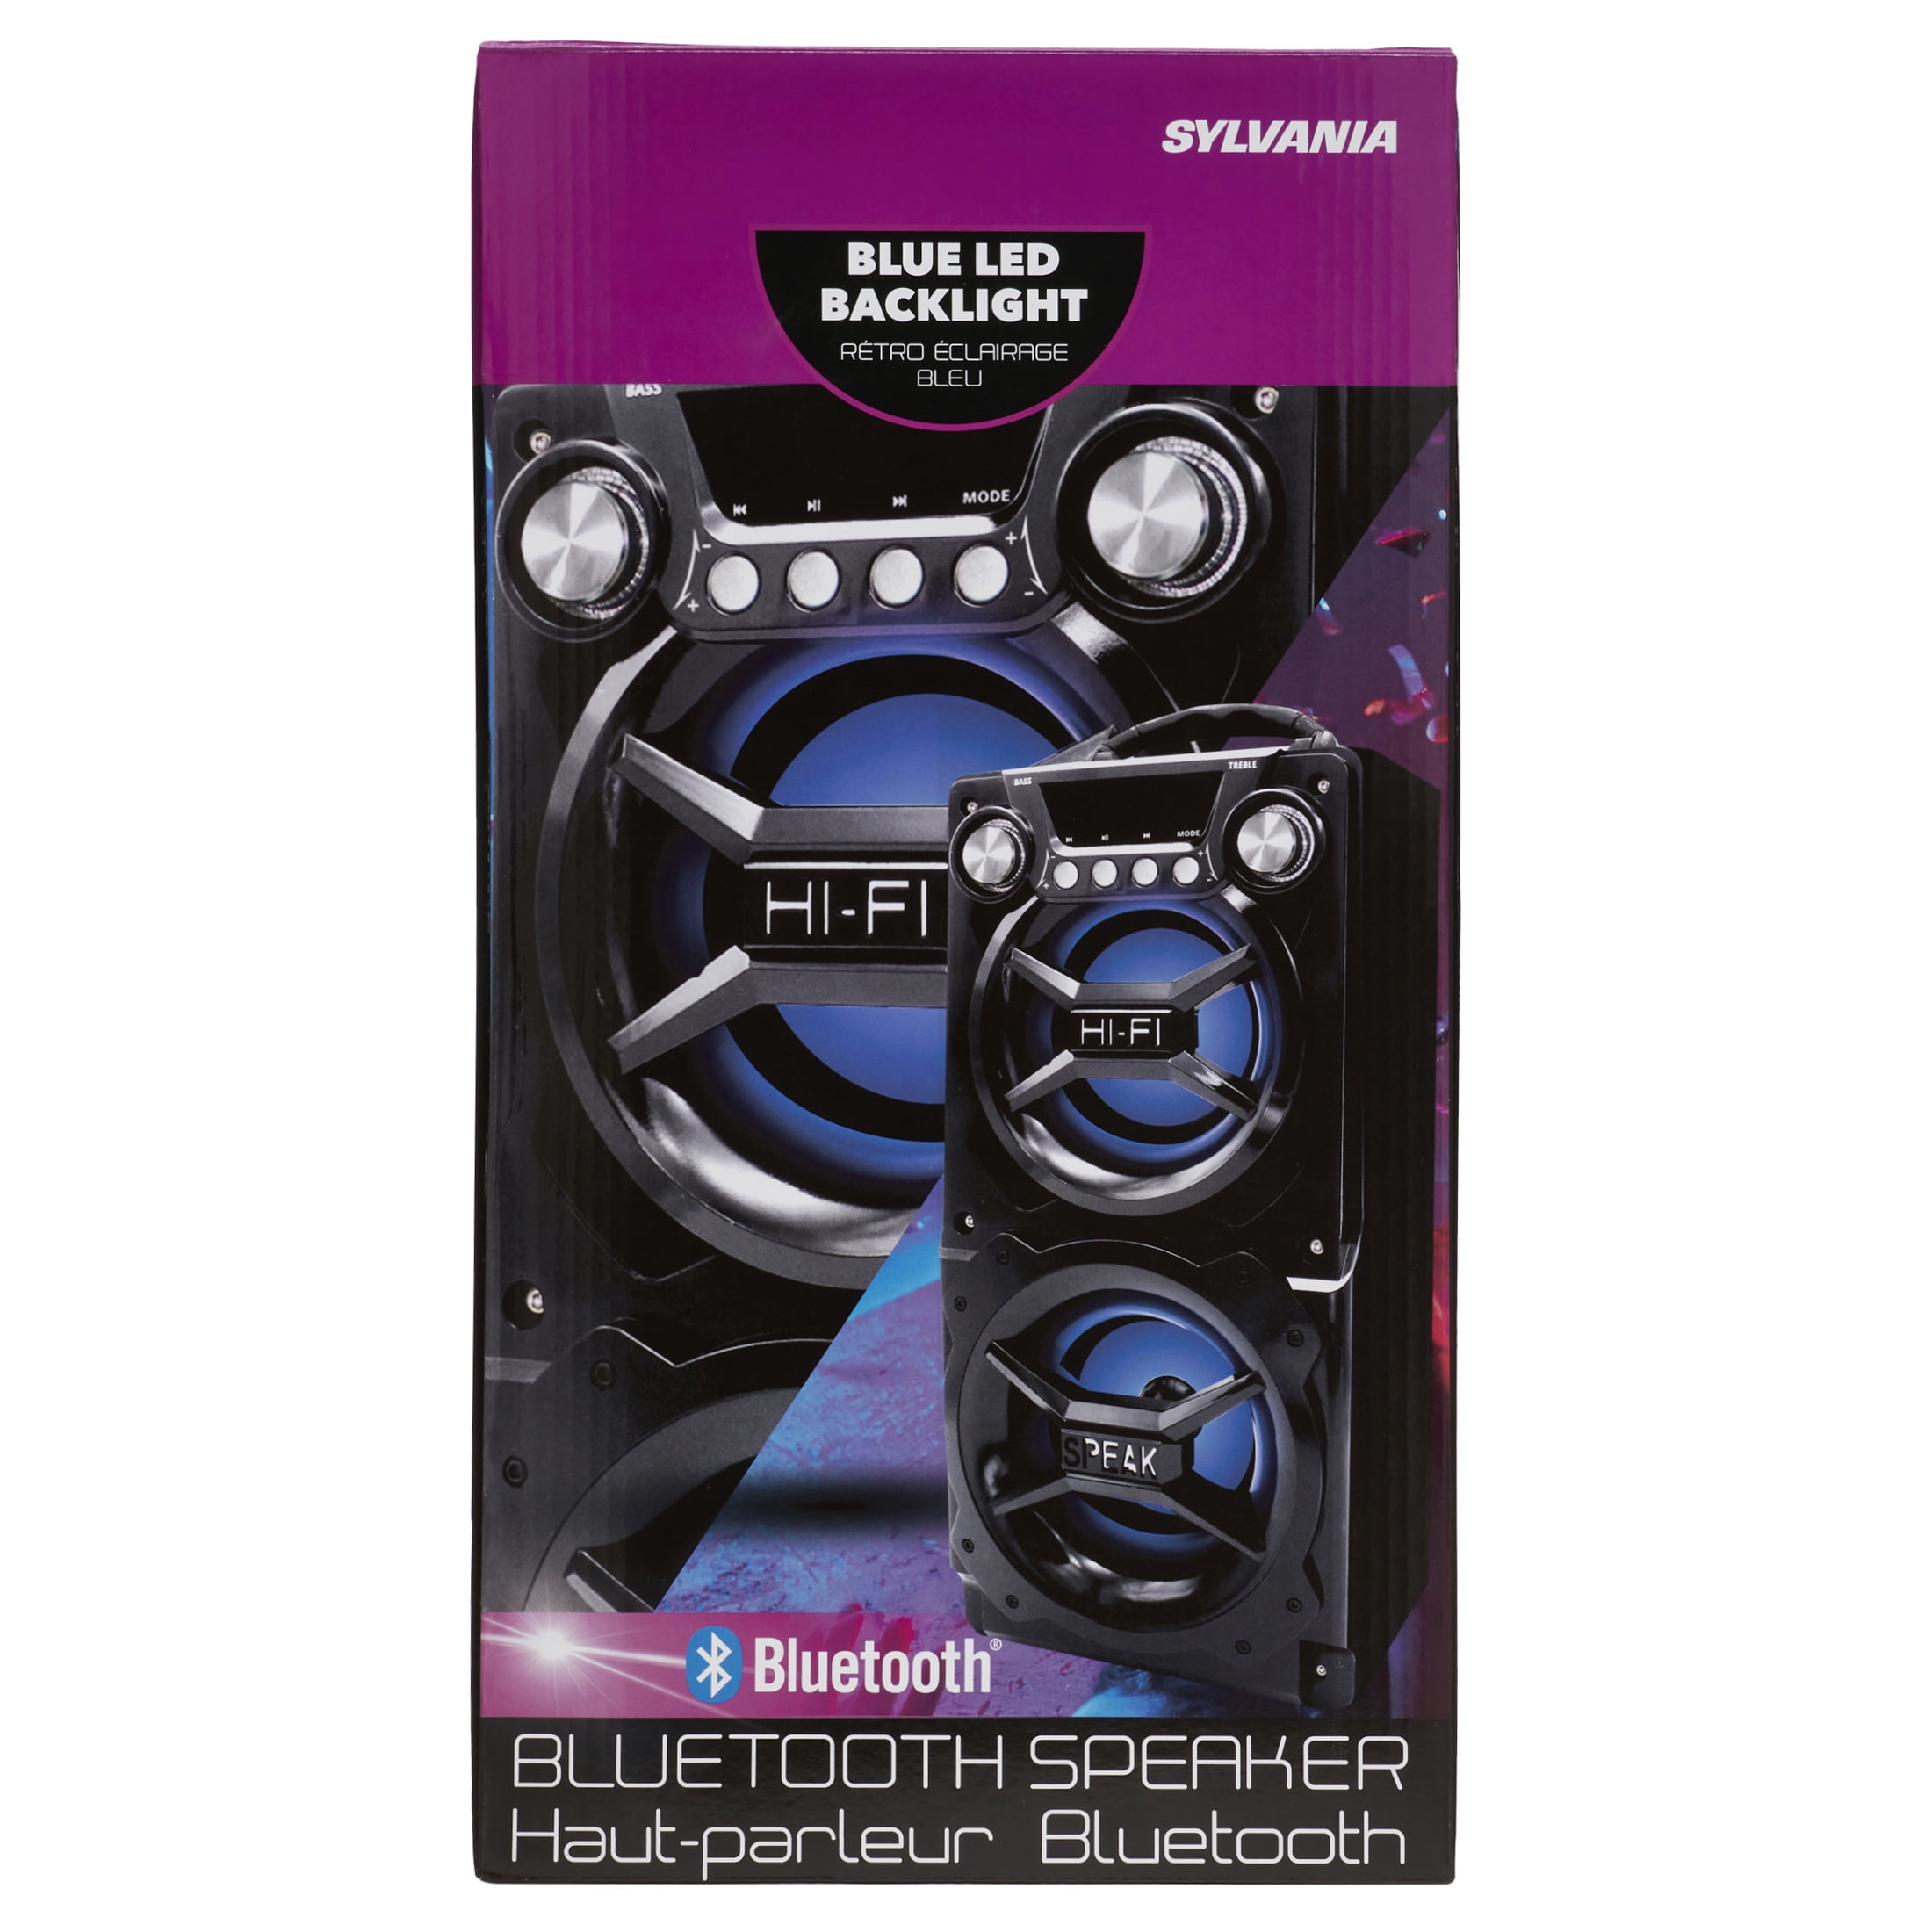 UpBright 5V AC/DC Adapter Compatible with Sylvania Blue LED Hi-Fi Speak  Portable Bluetooth BT Speaker SP328 SP328-B Black DVE DSA-12CB-05 050200